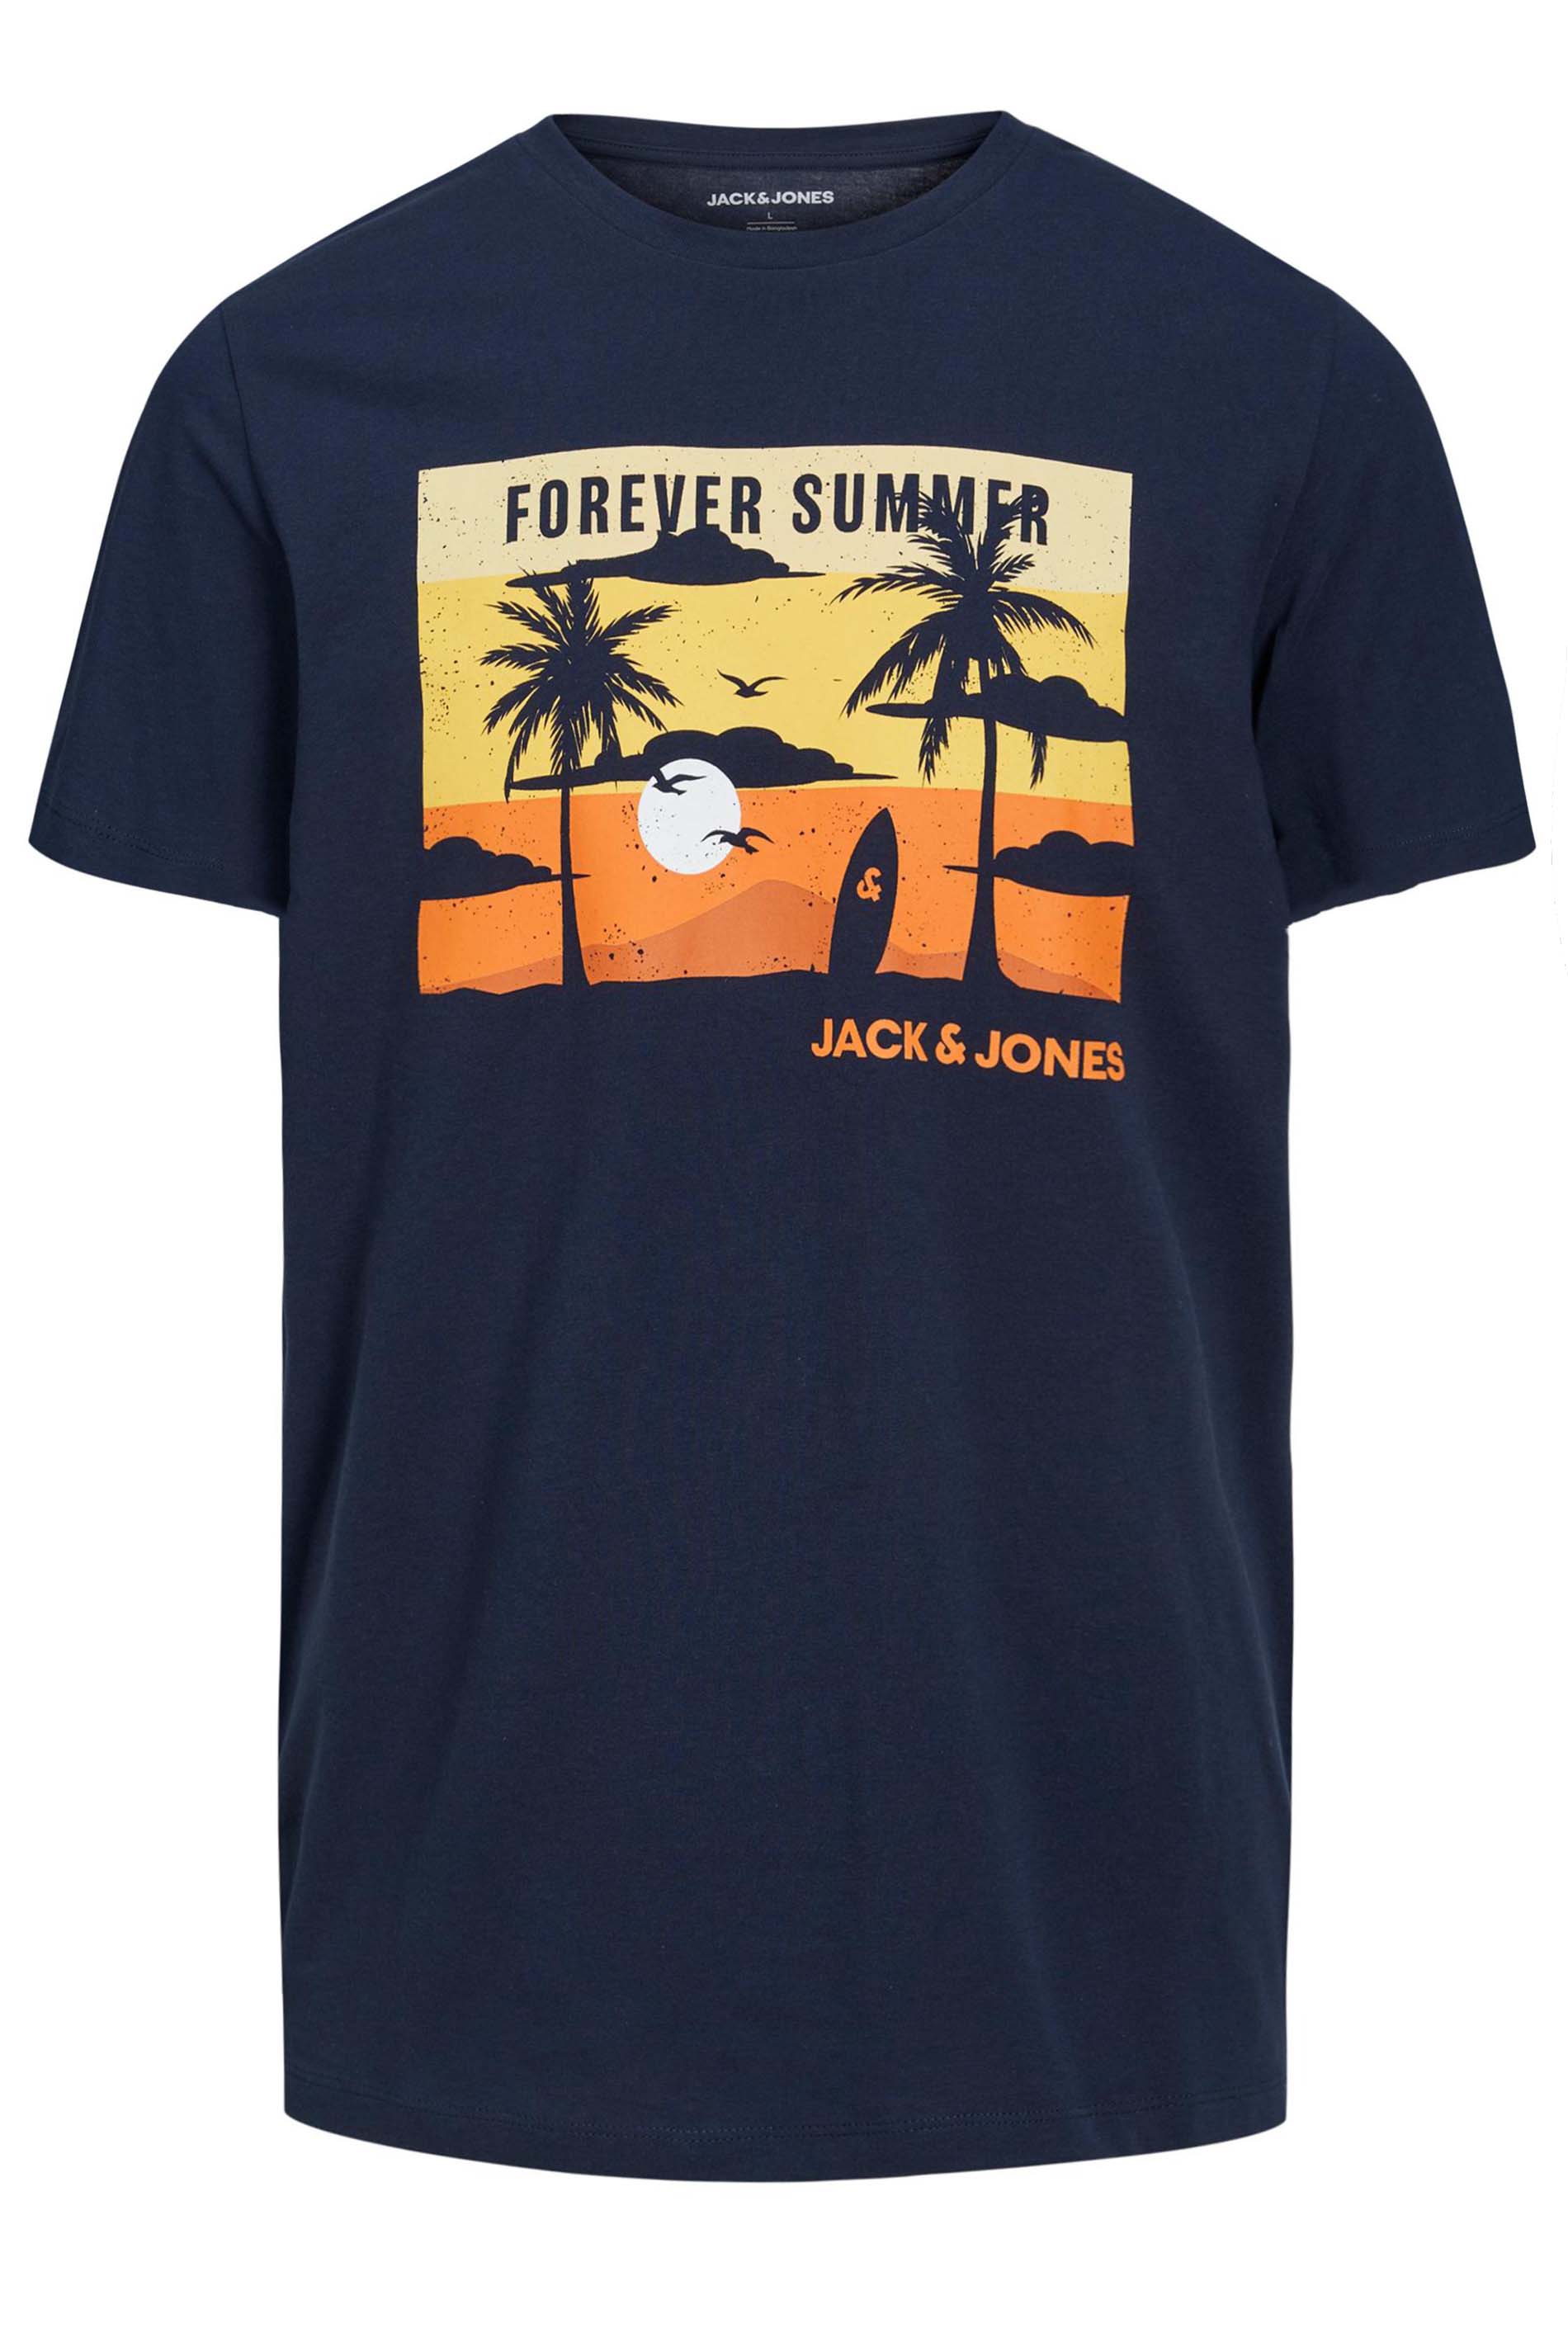 JACK & JONES Big & Tall Navy Blue 'Forever Summer' Print T-Shirt | BadRhino 2